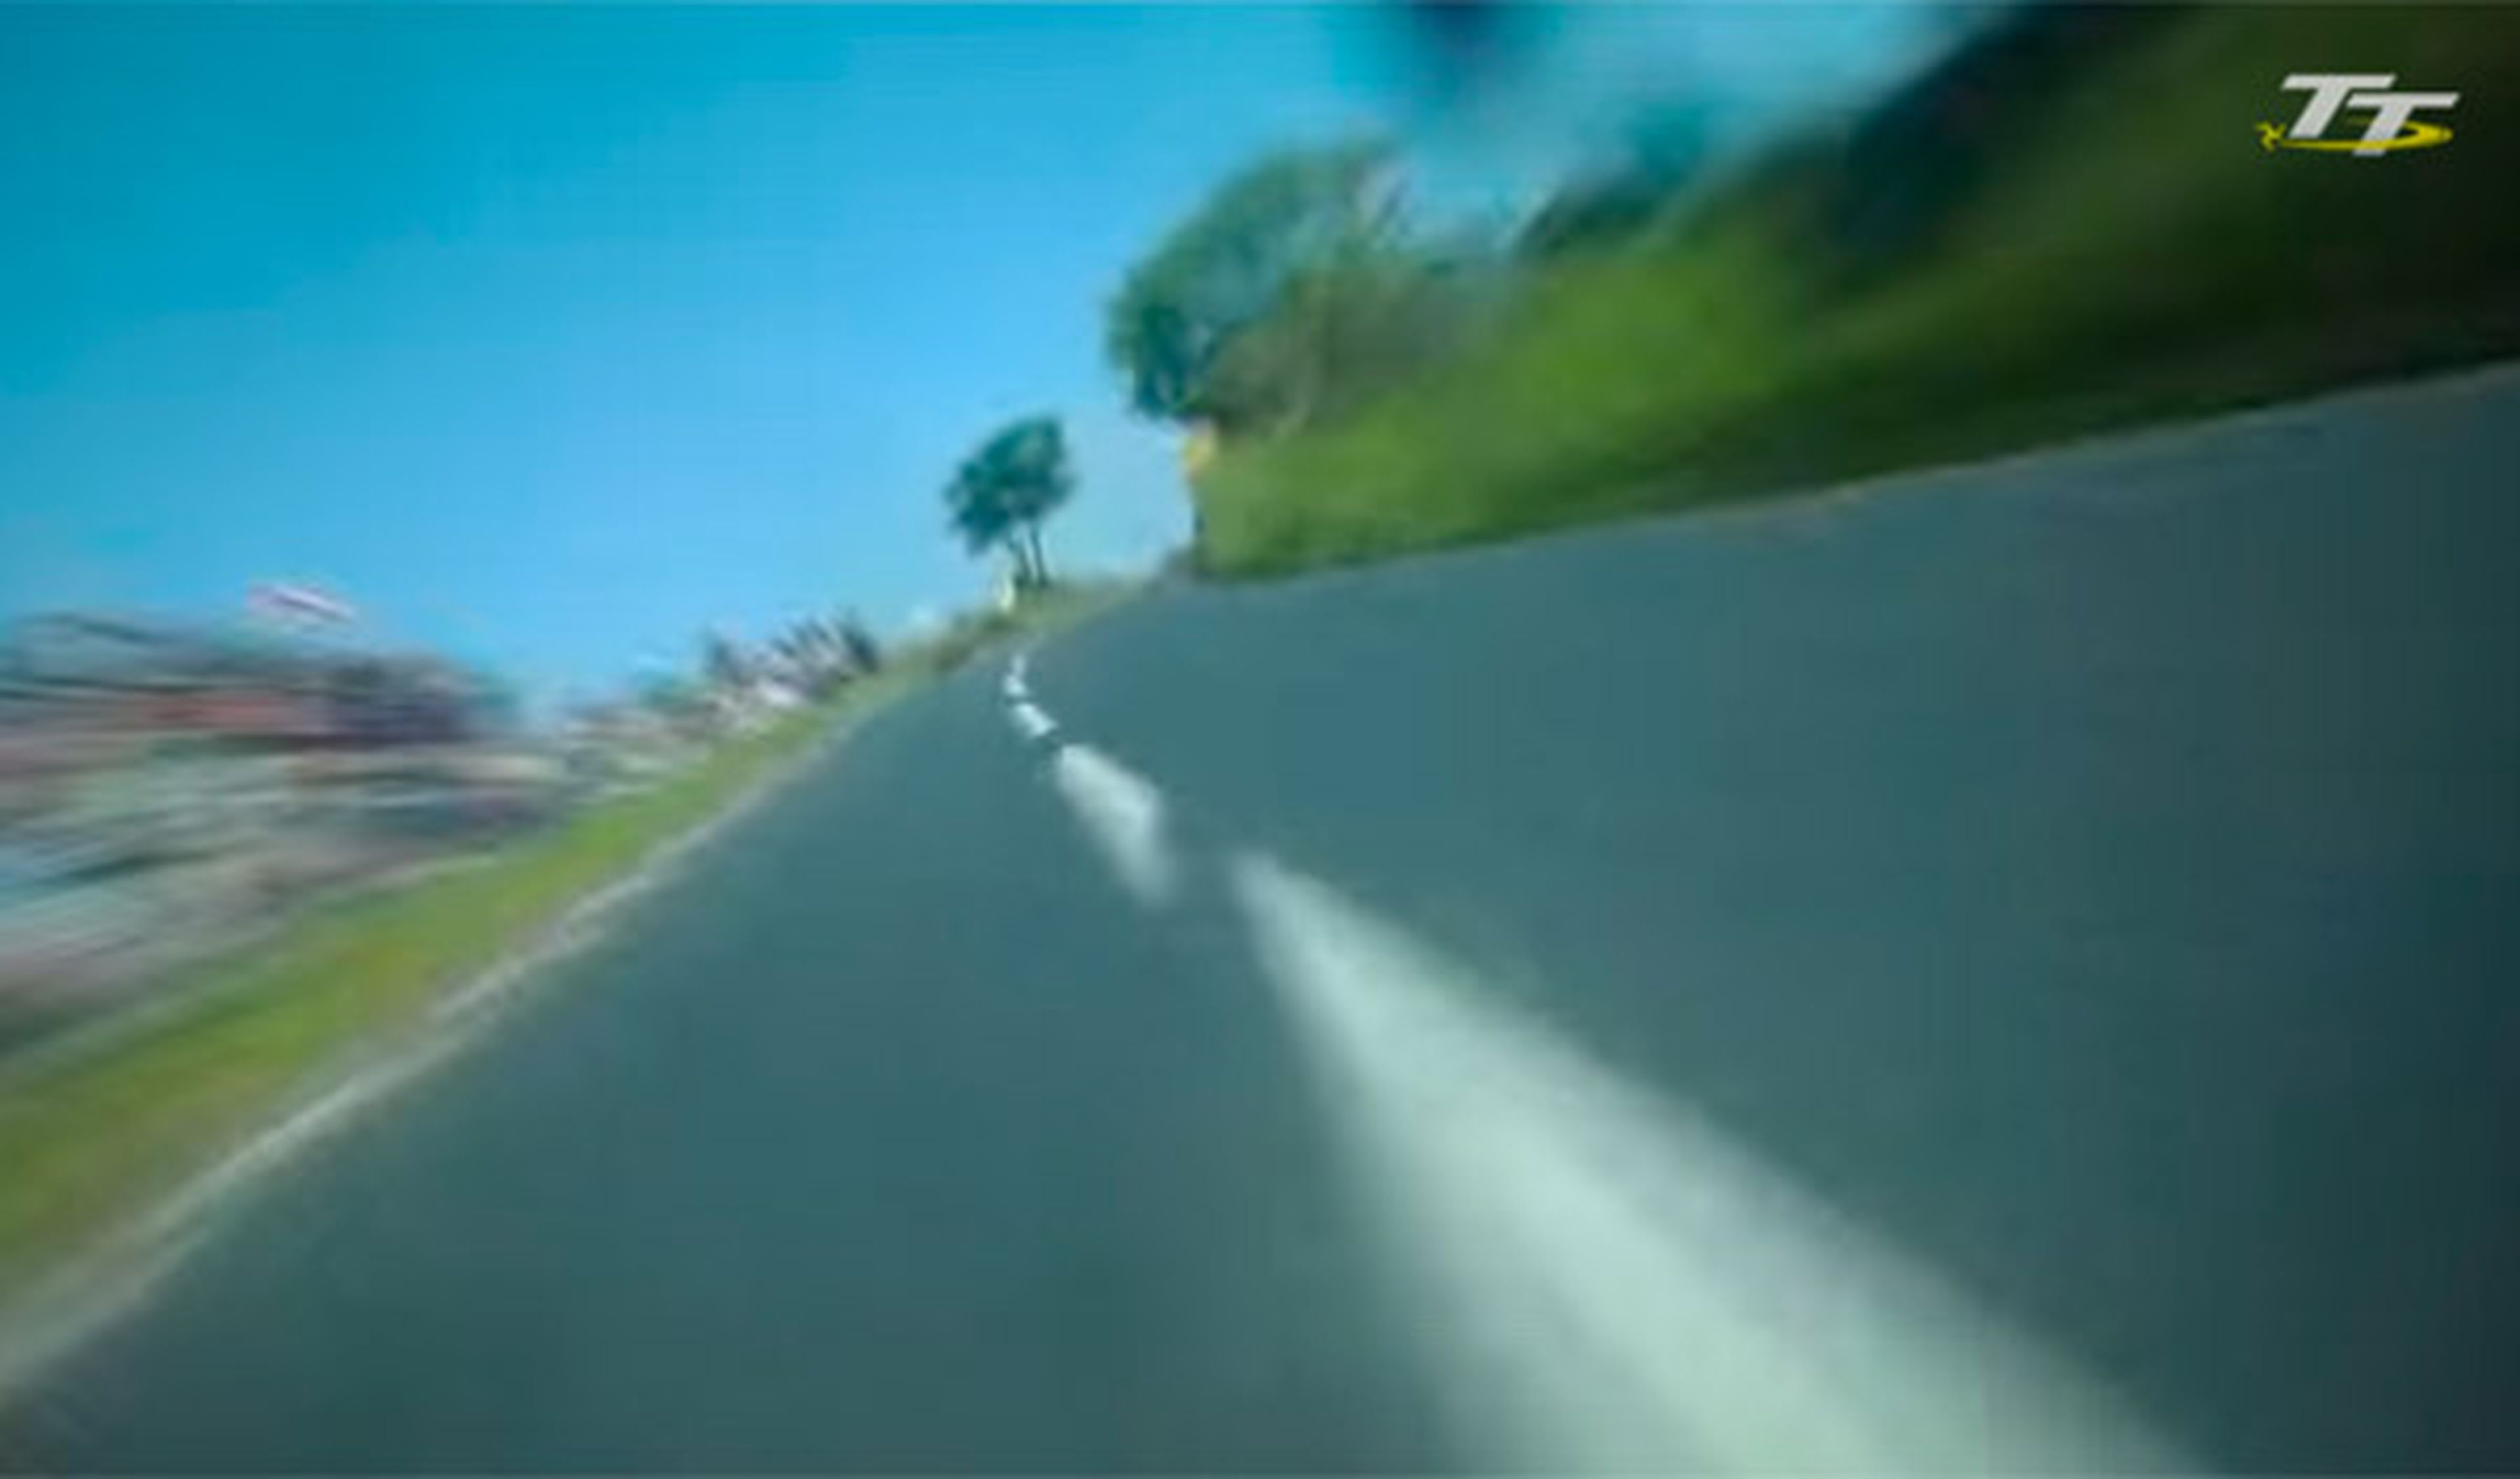 Récord de vuelta rápida en Isla de Man: ¡213 km/h de media!